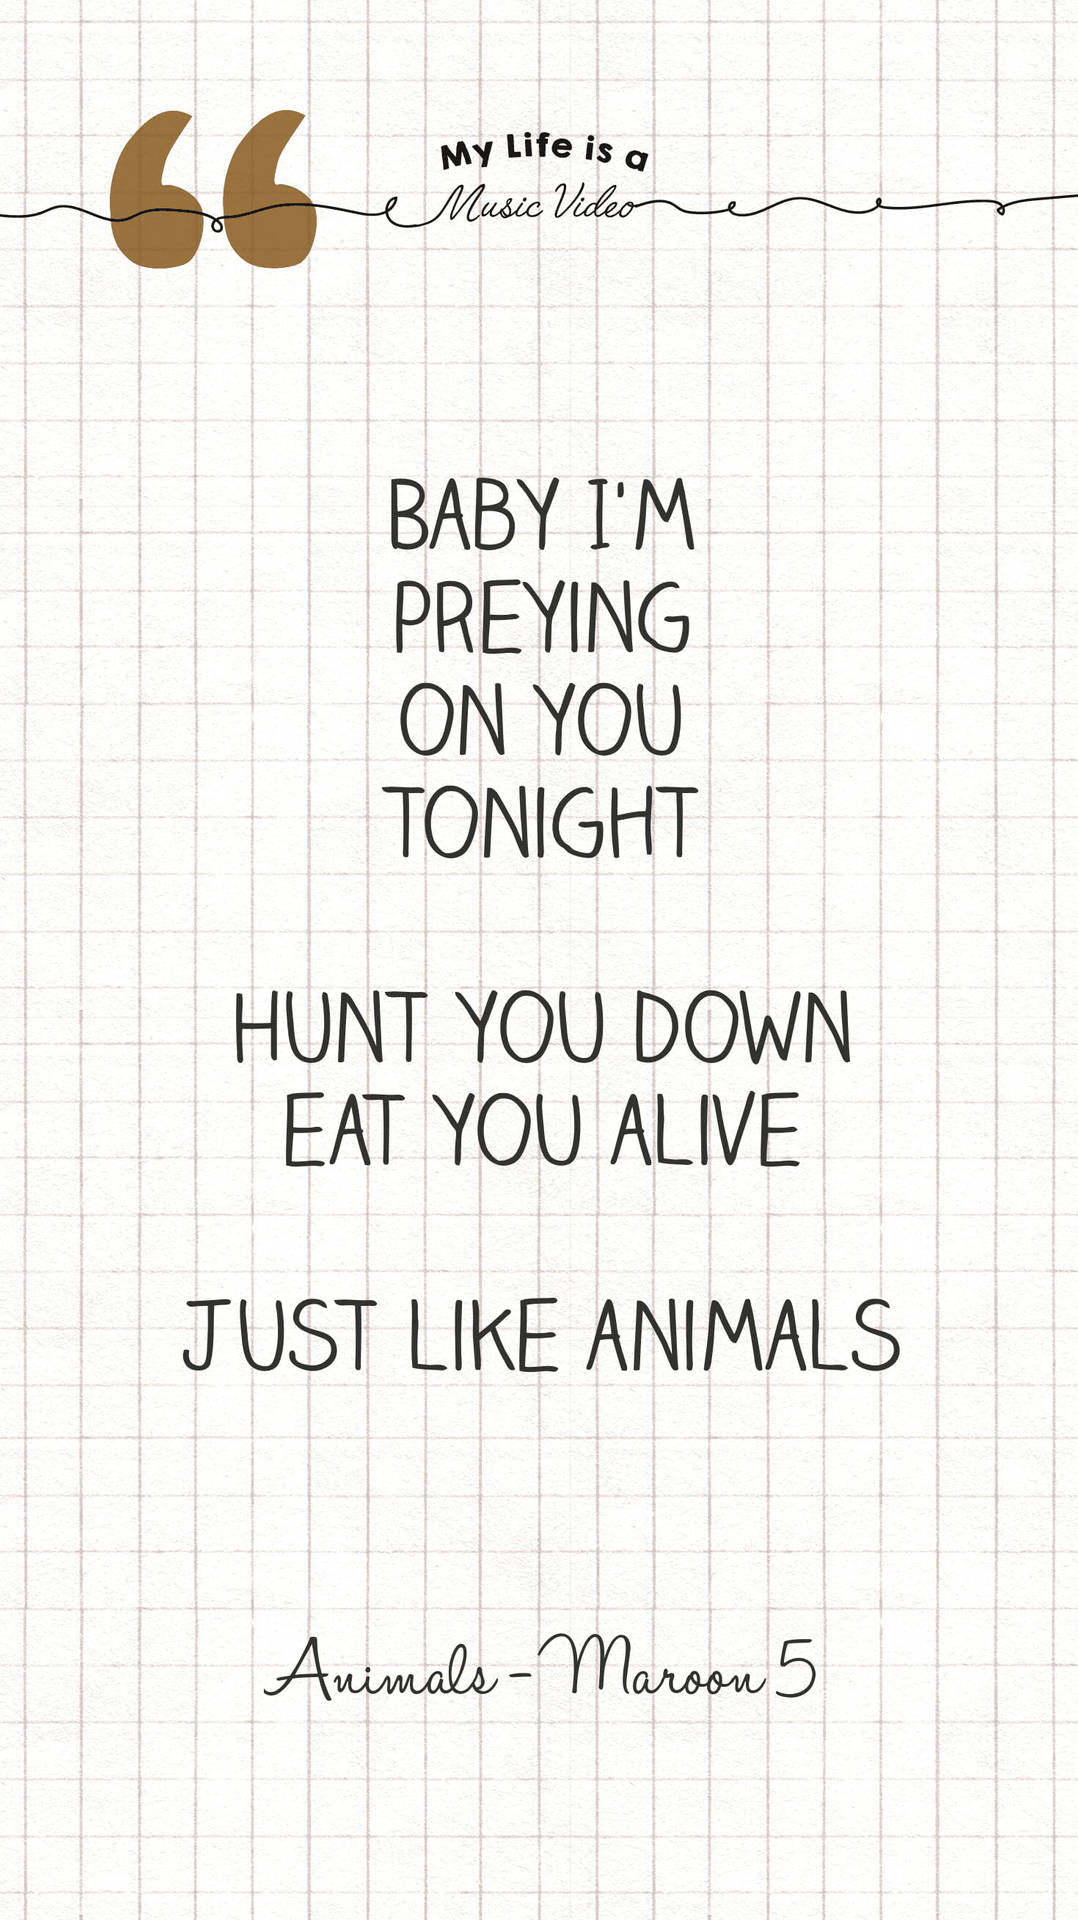 Passionate Maroon 5 Band With Animals Lyrics Poster Background